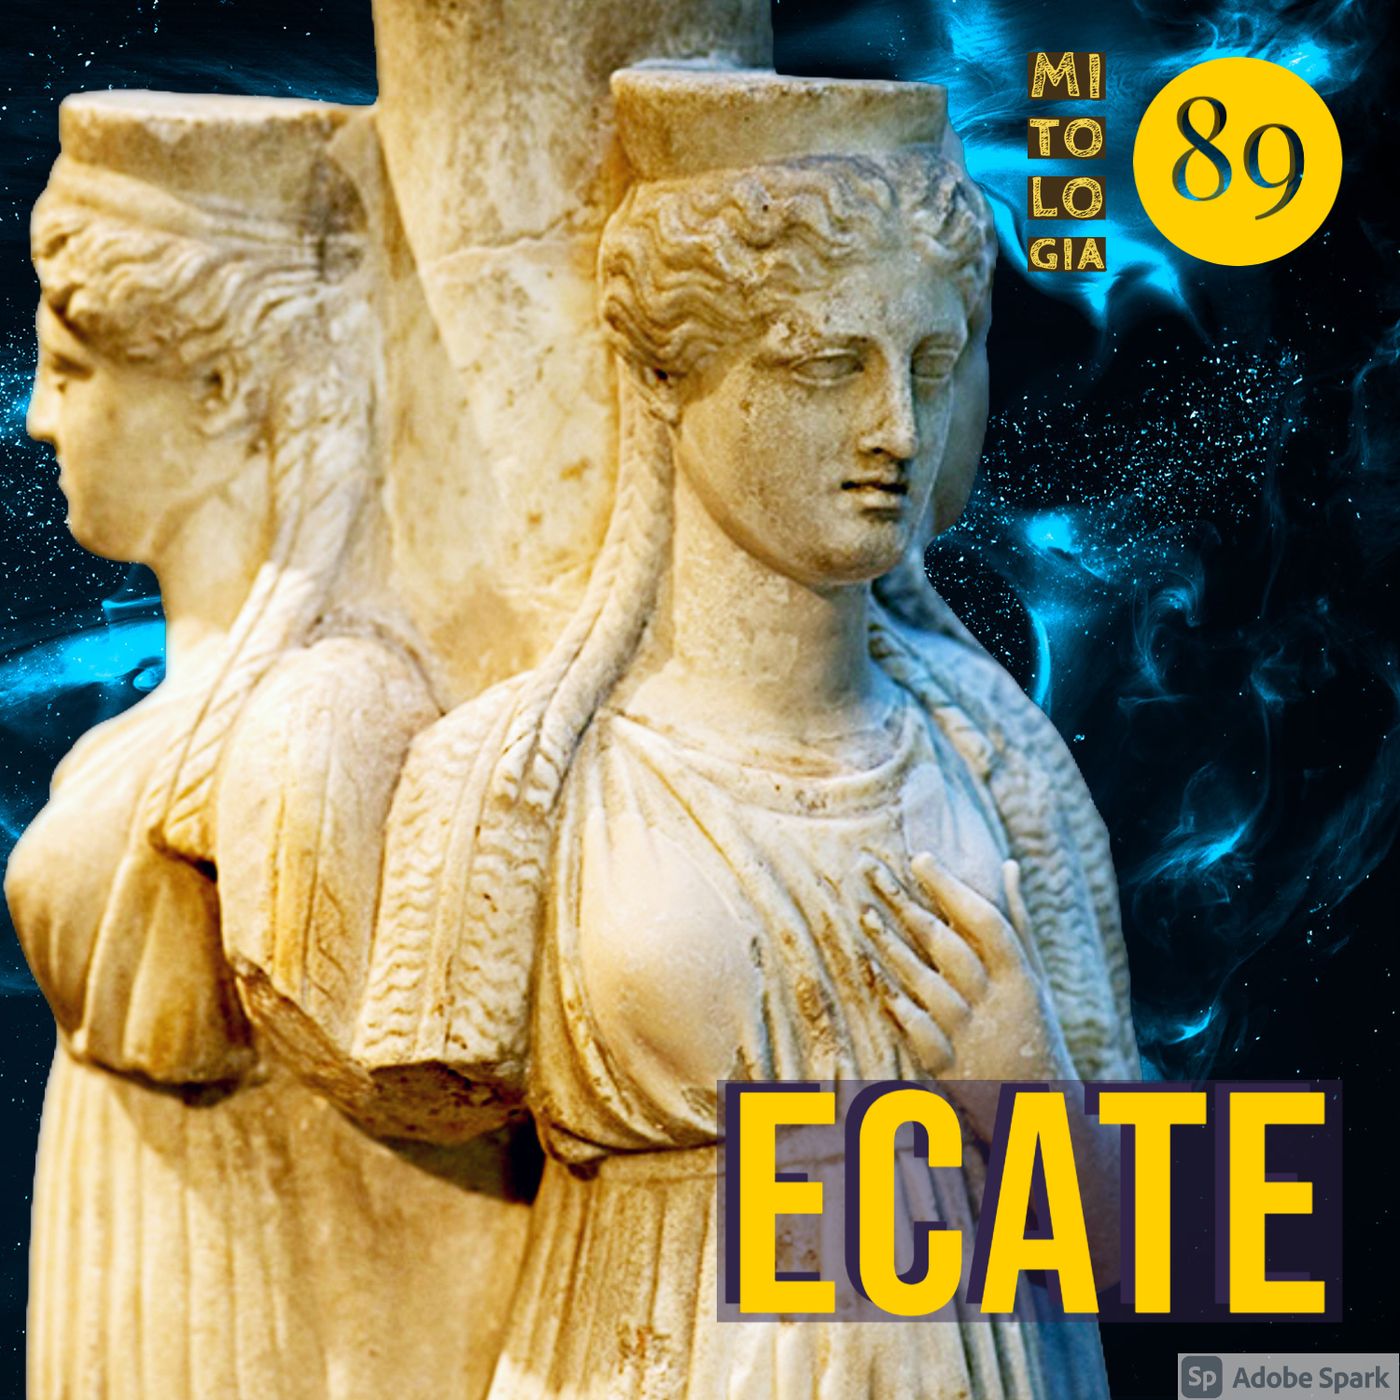 Ecate, la dea dalle tre teste